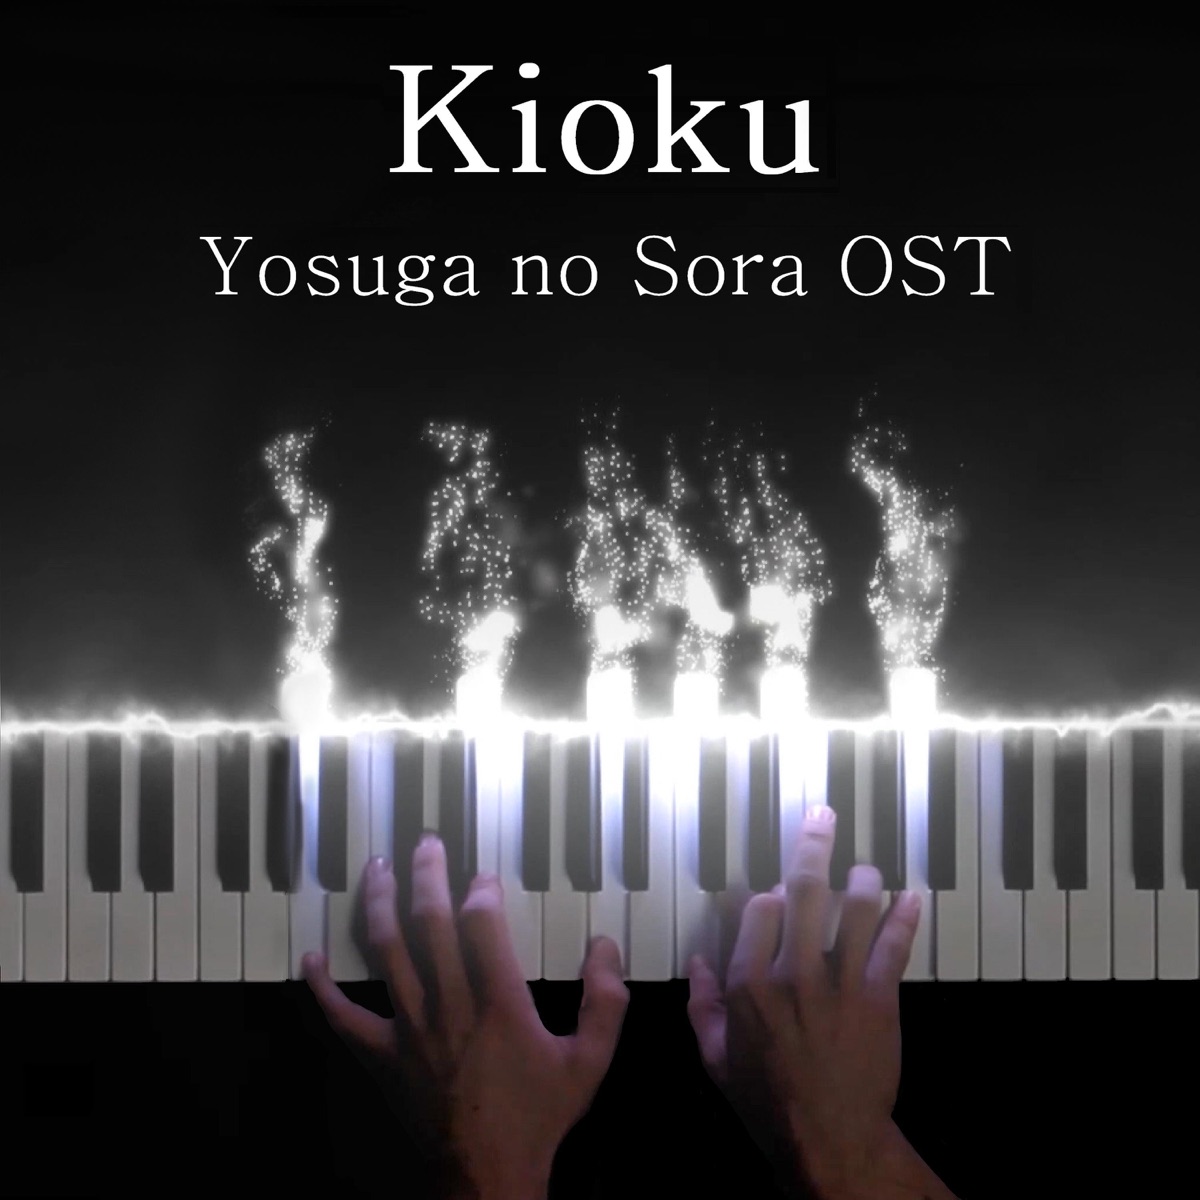 Stream yosuga no sora kioku.mp3 by Misaki_mei